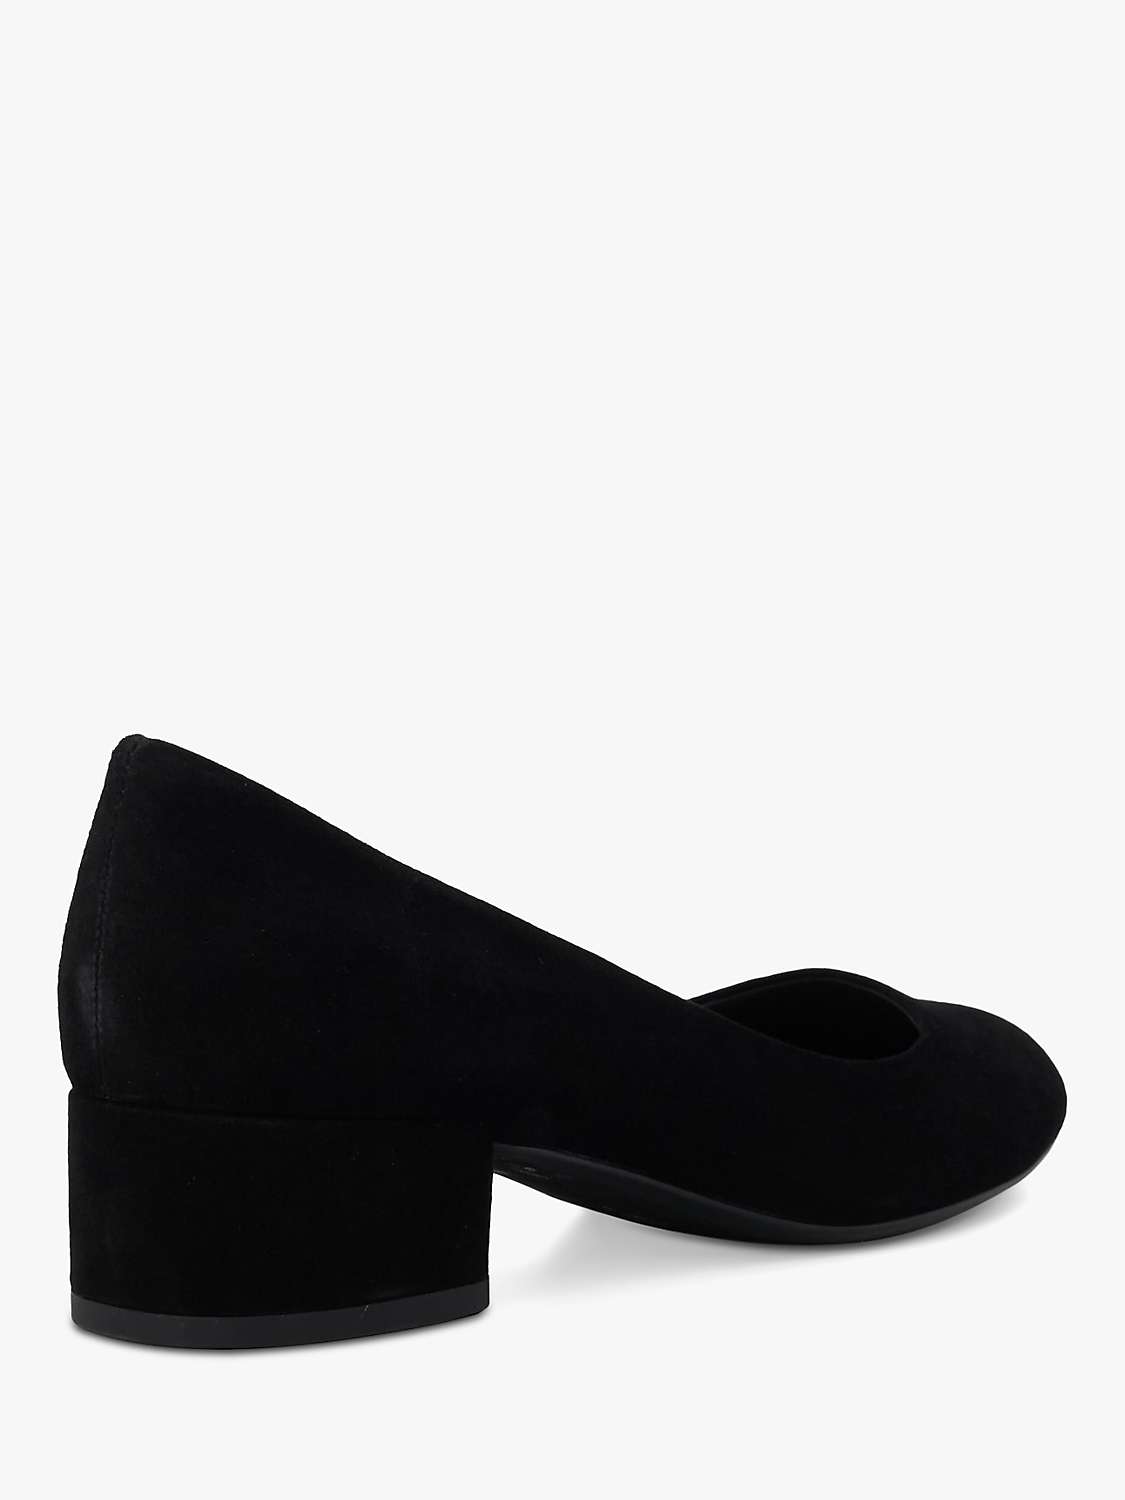 Dune Bracket Block Heel Suede Court Shoes, Black at John Lewis & Partners